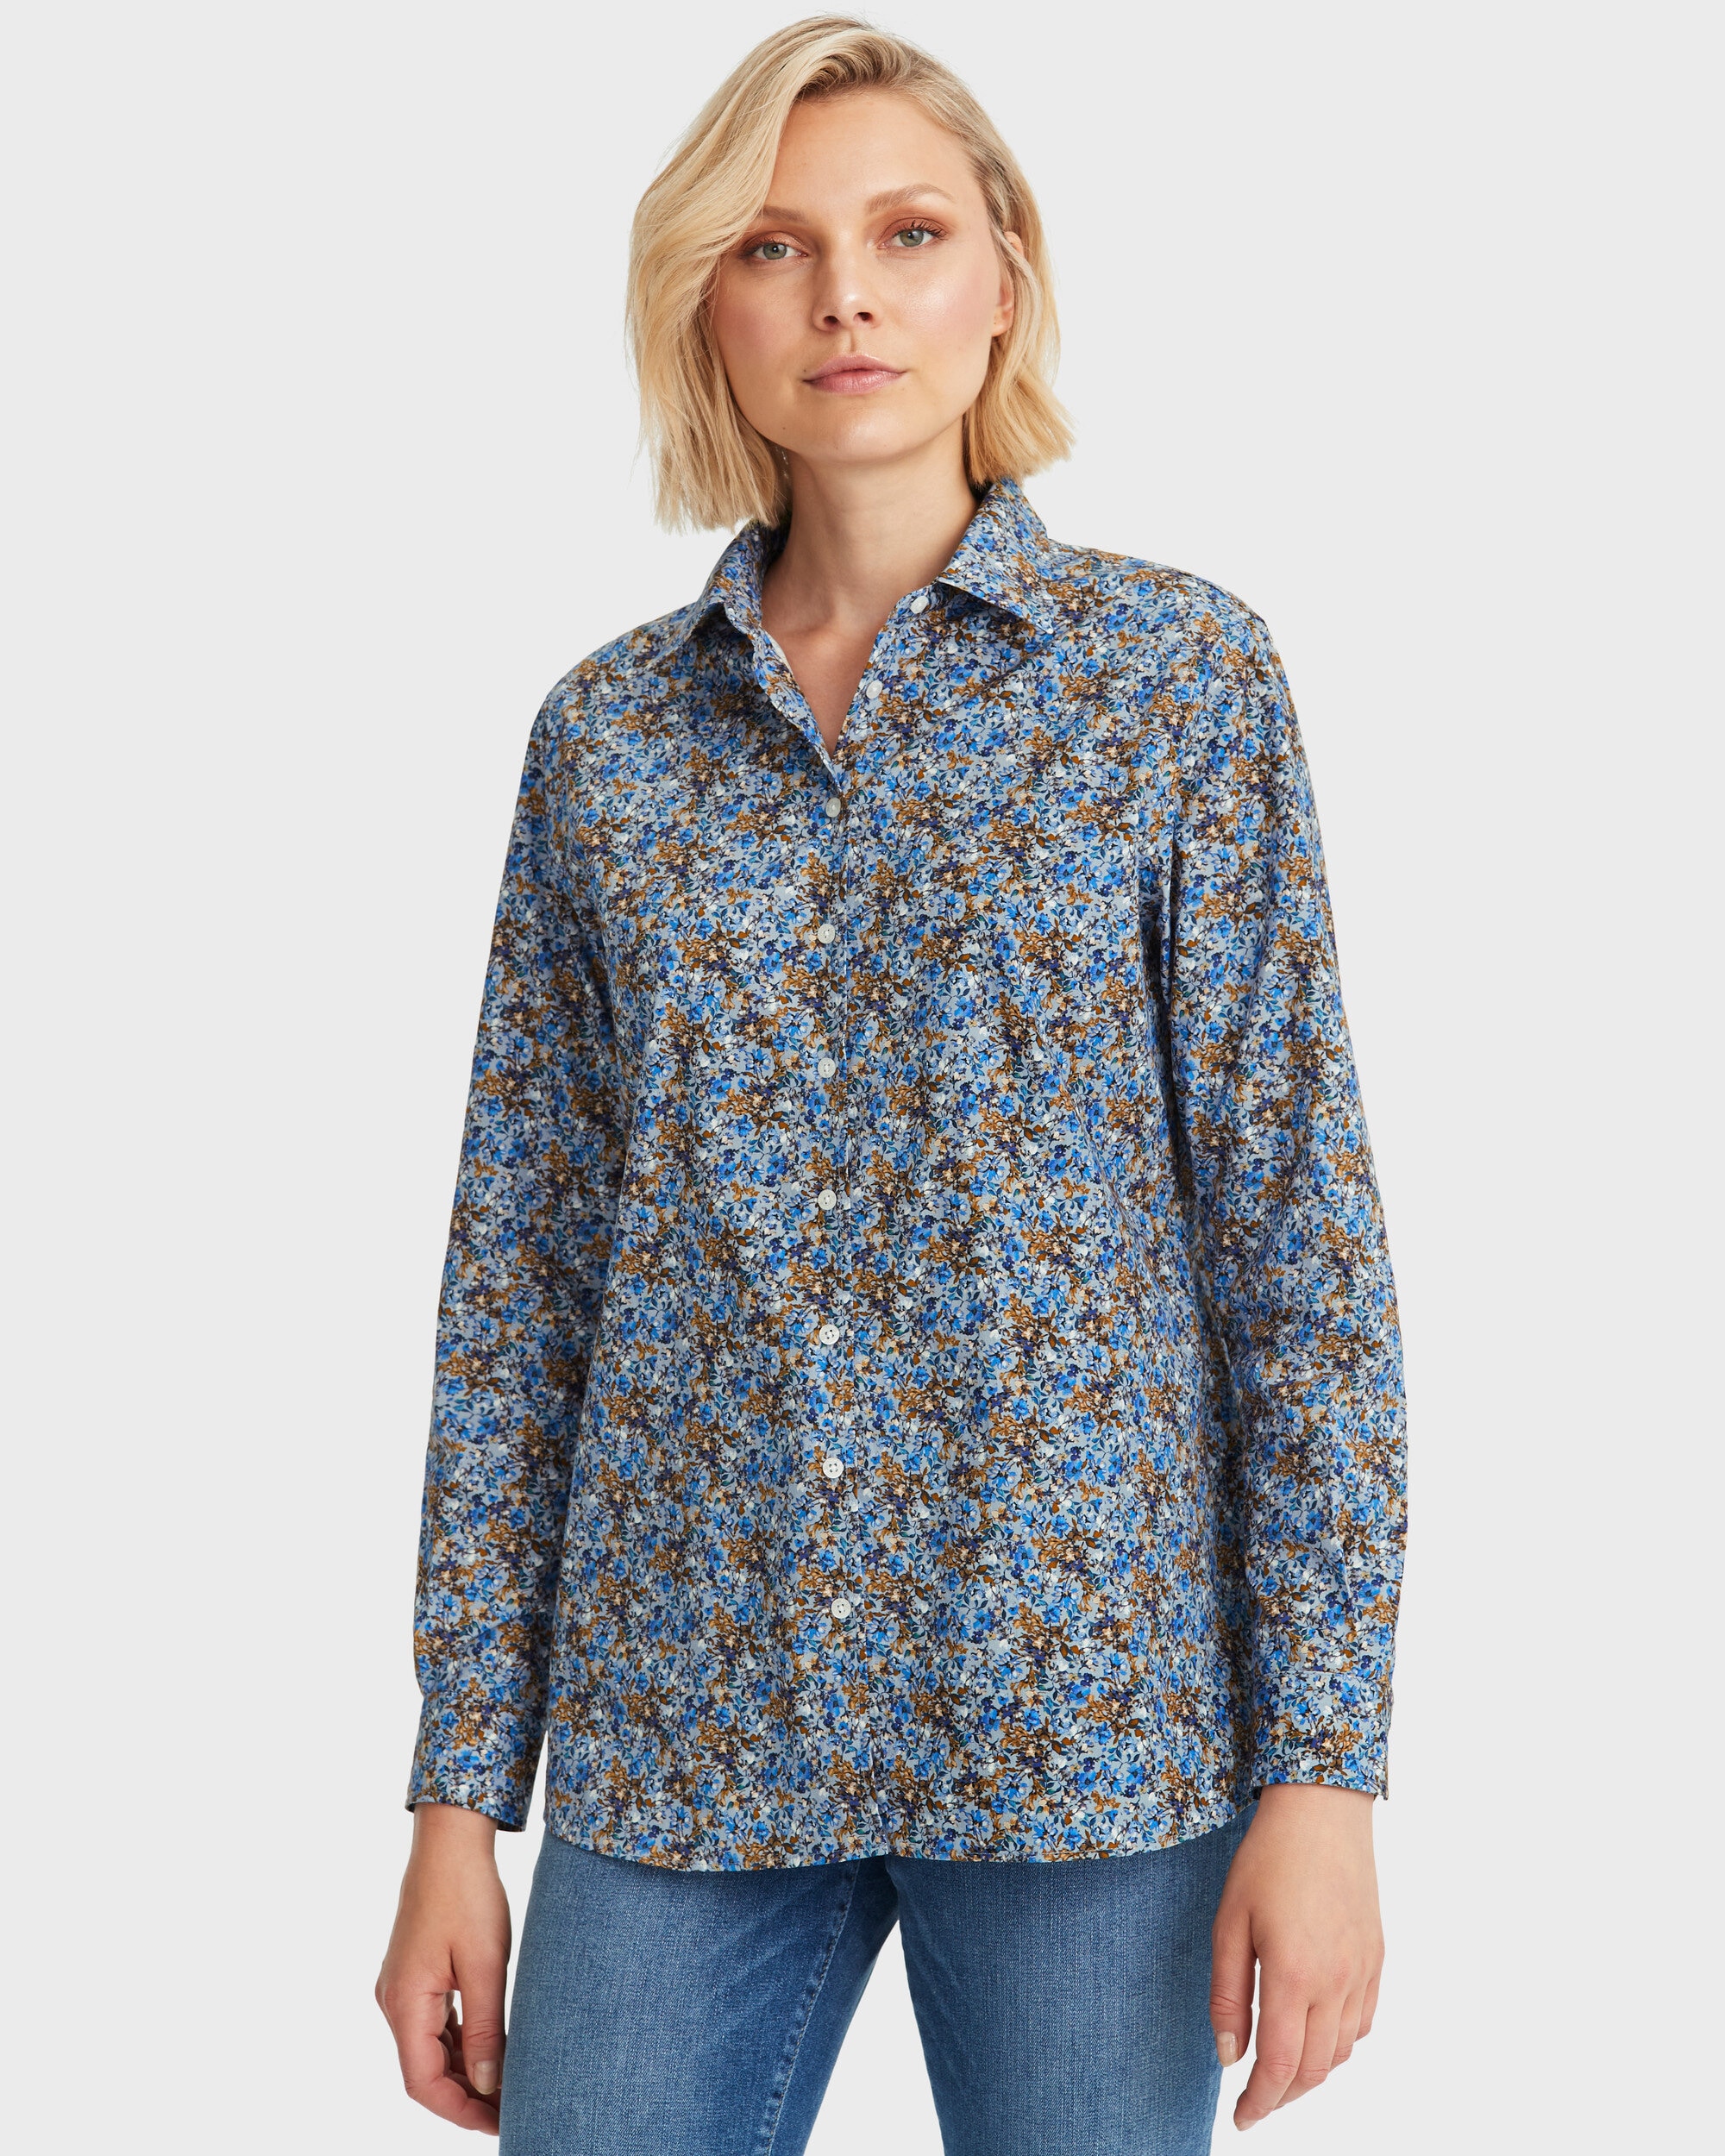 Elsa Blue Flower Shirt